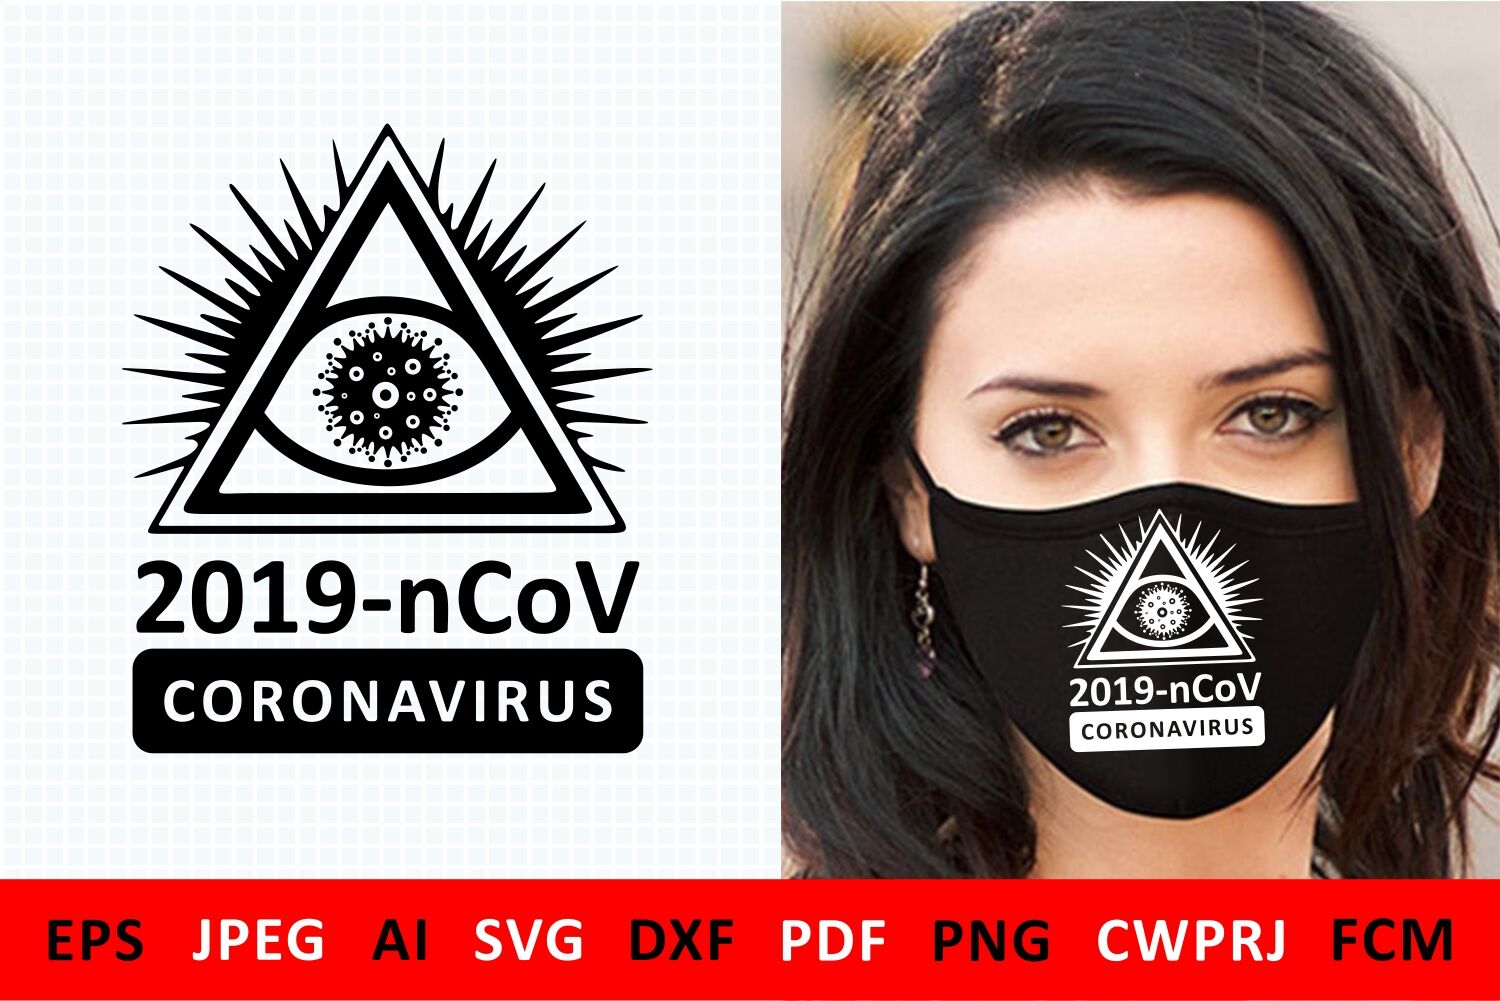 Svg Covid 19 Coronavirus 2019 Ncov For Diy Mask For Volunteers By Zoya Miller Svg Thehungryjpeg Com